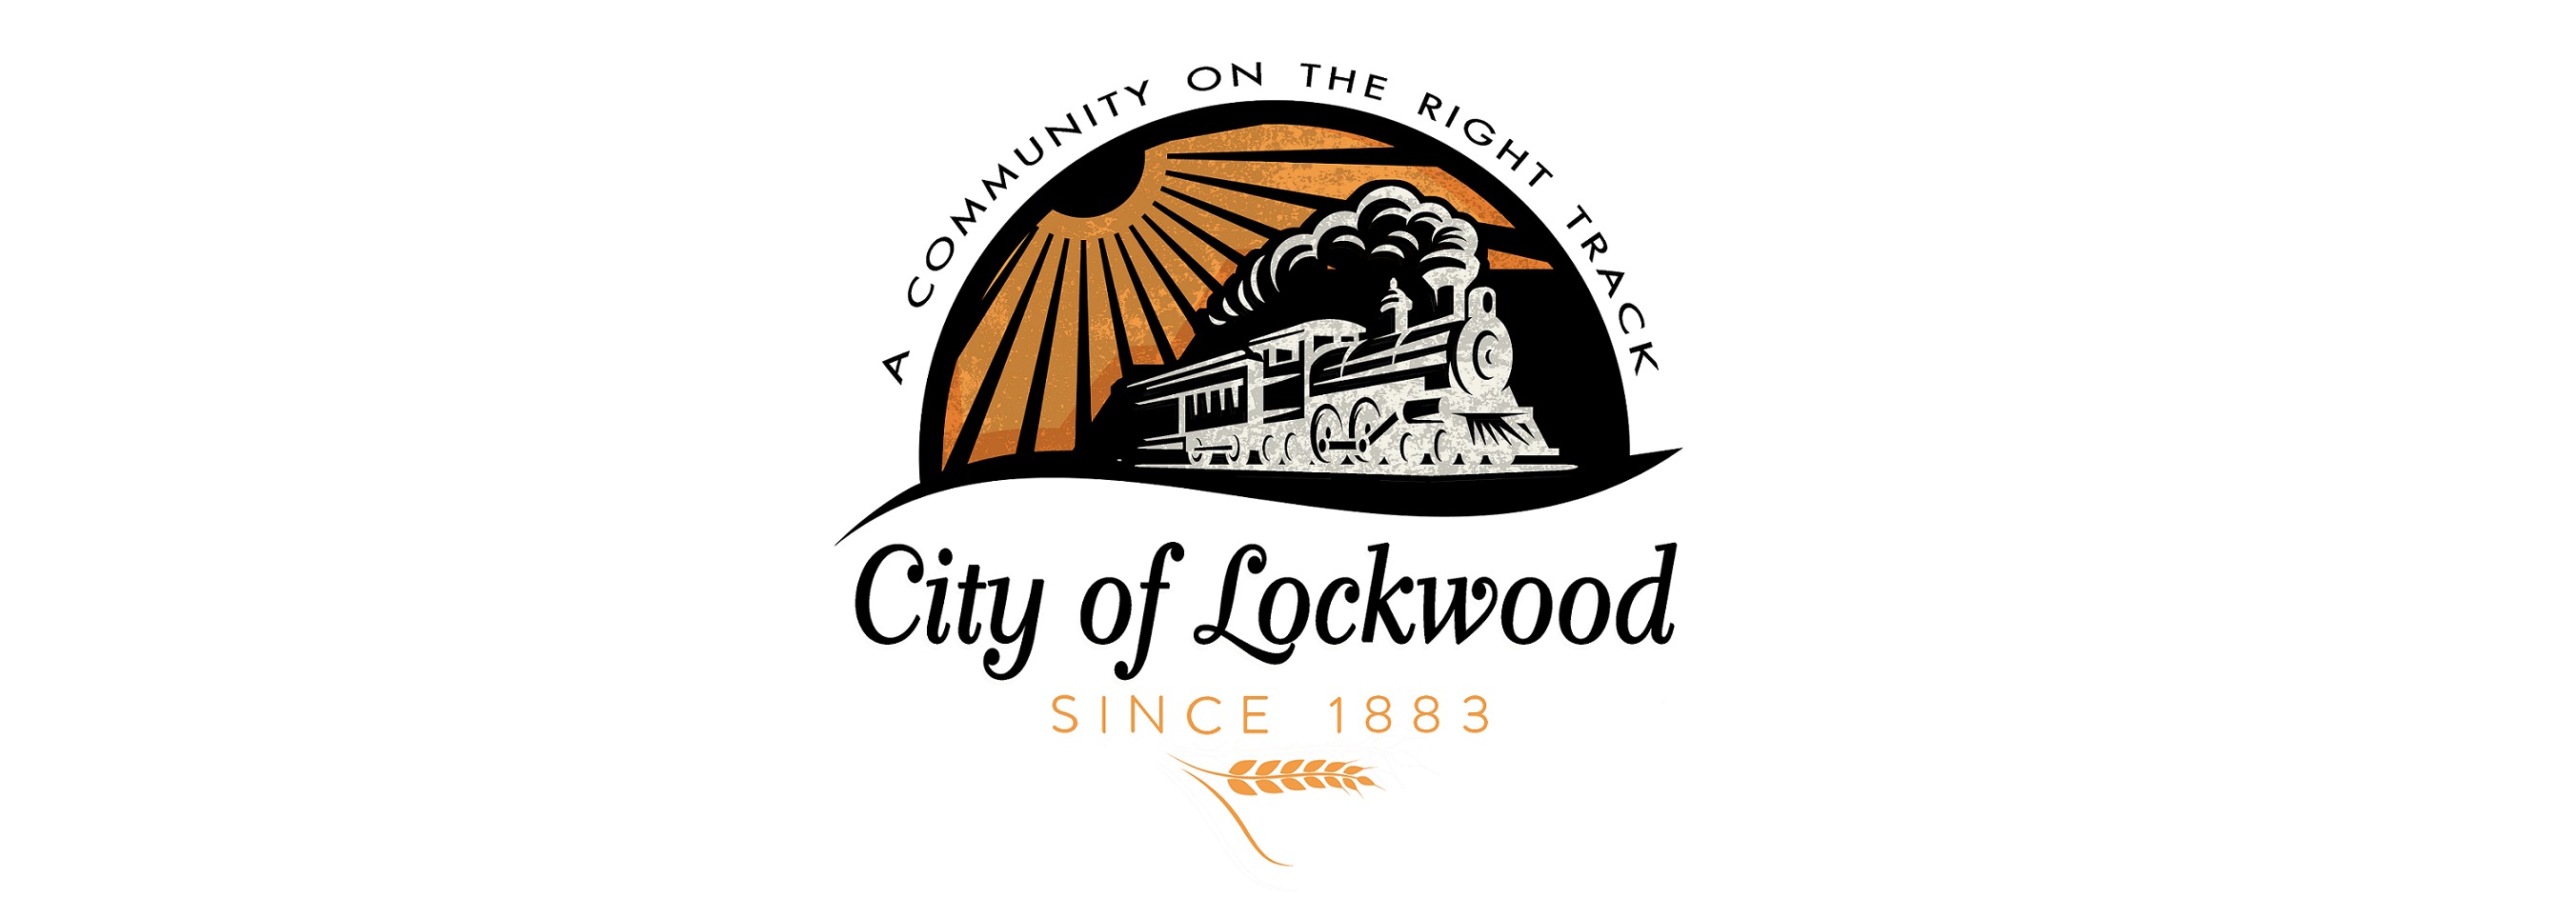 City of Lockwood